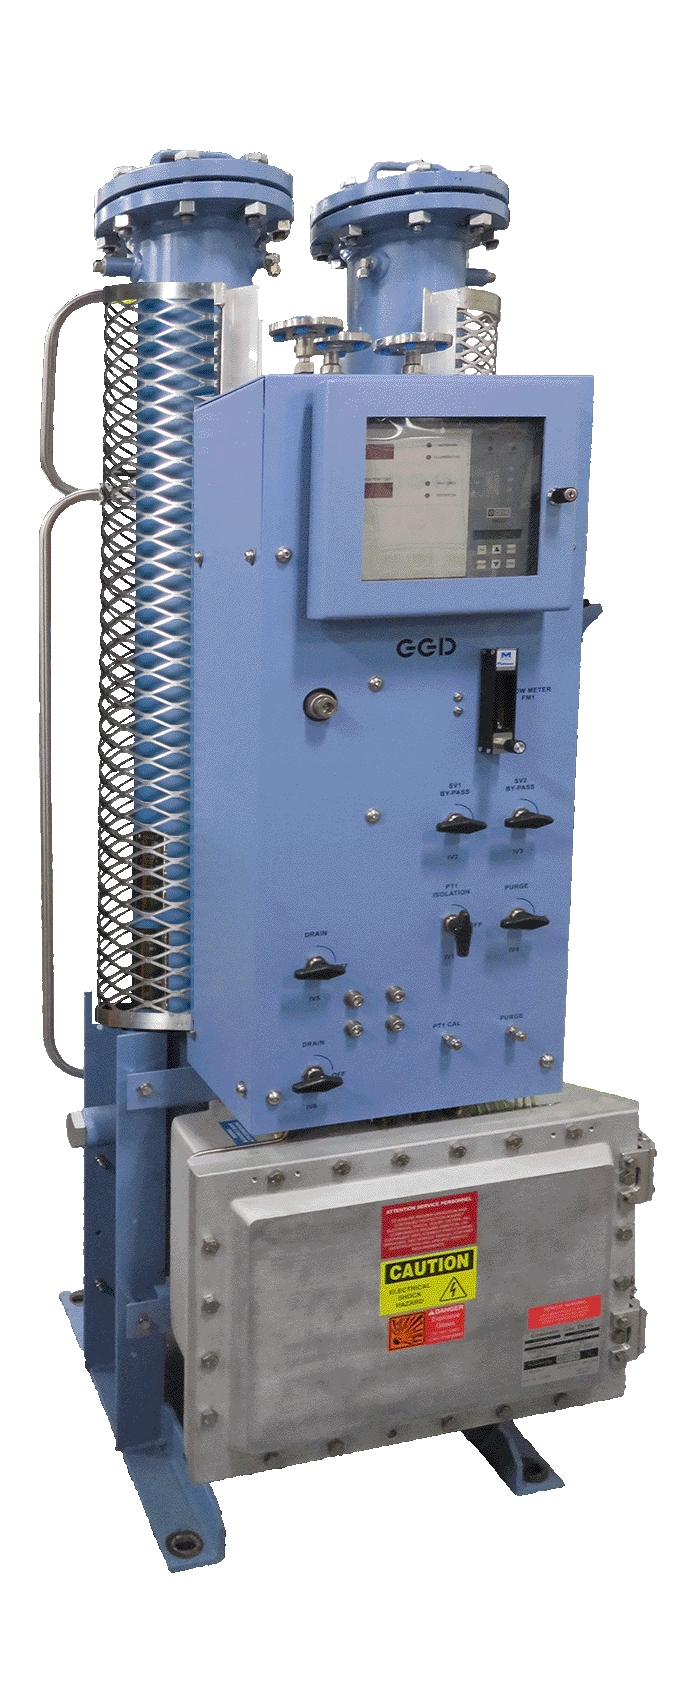 eone generator gas dryer